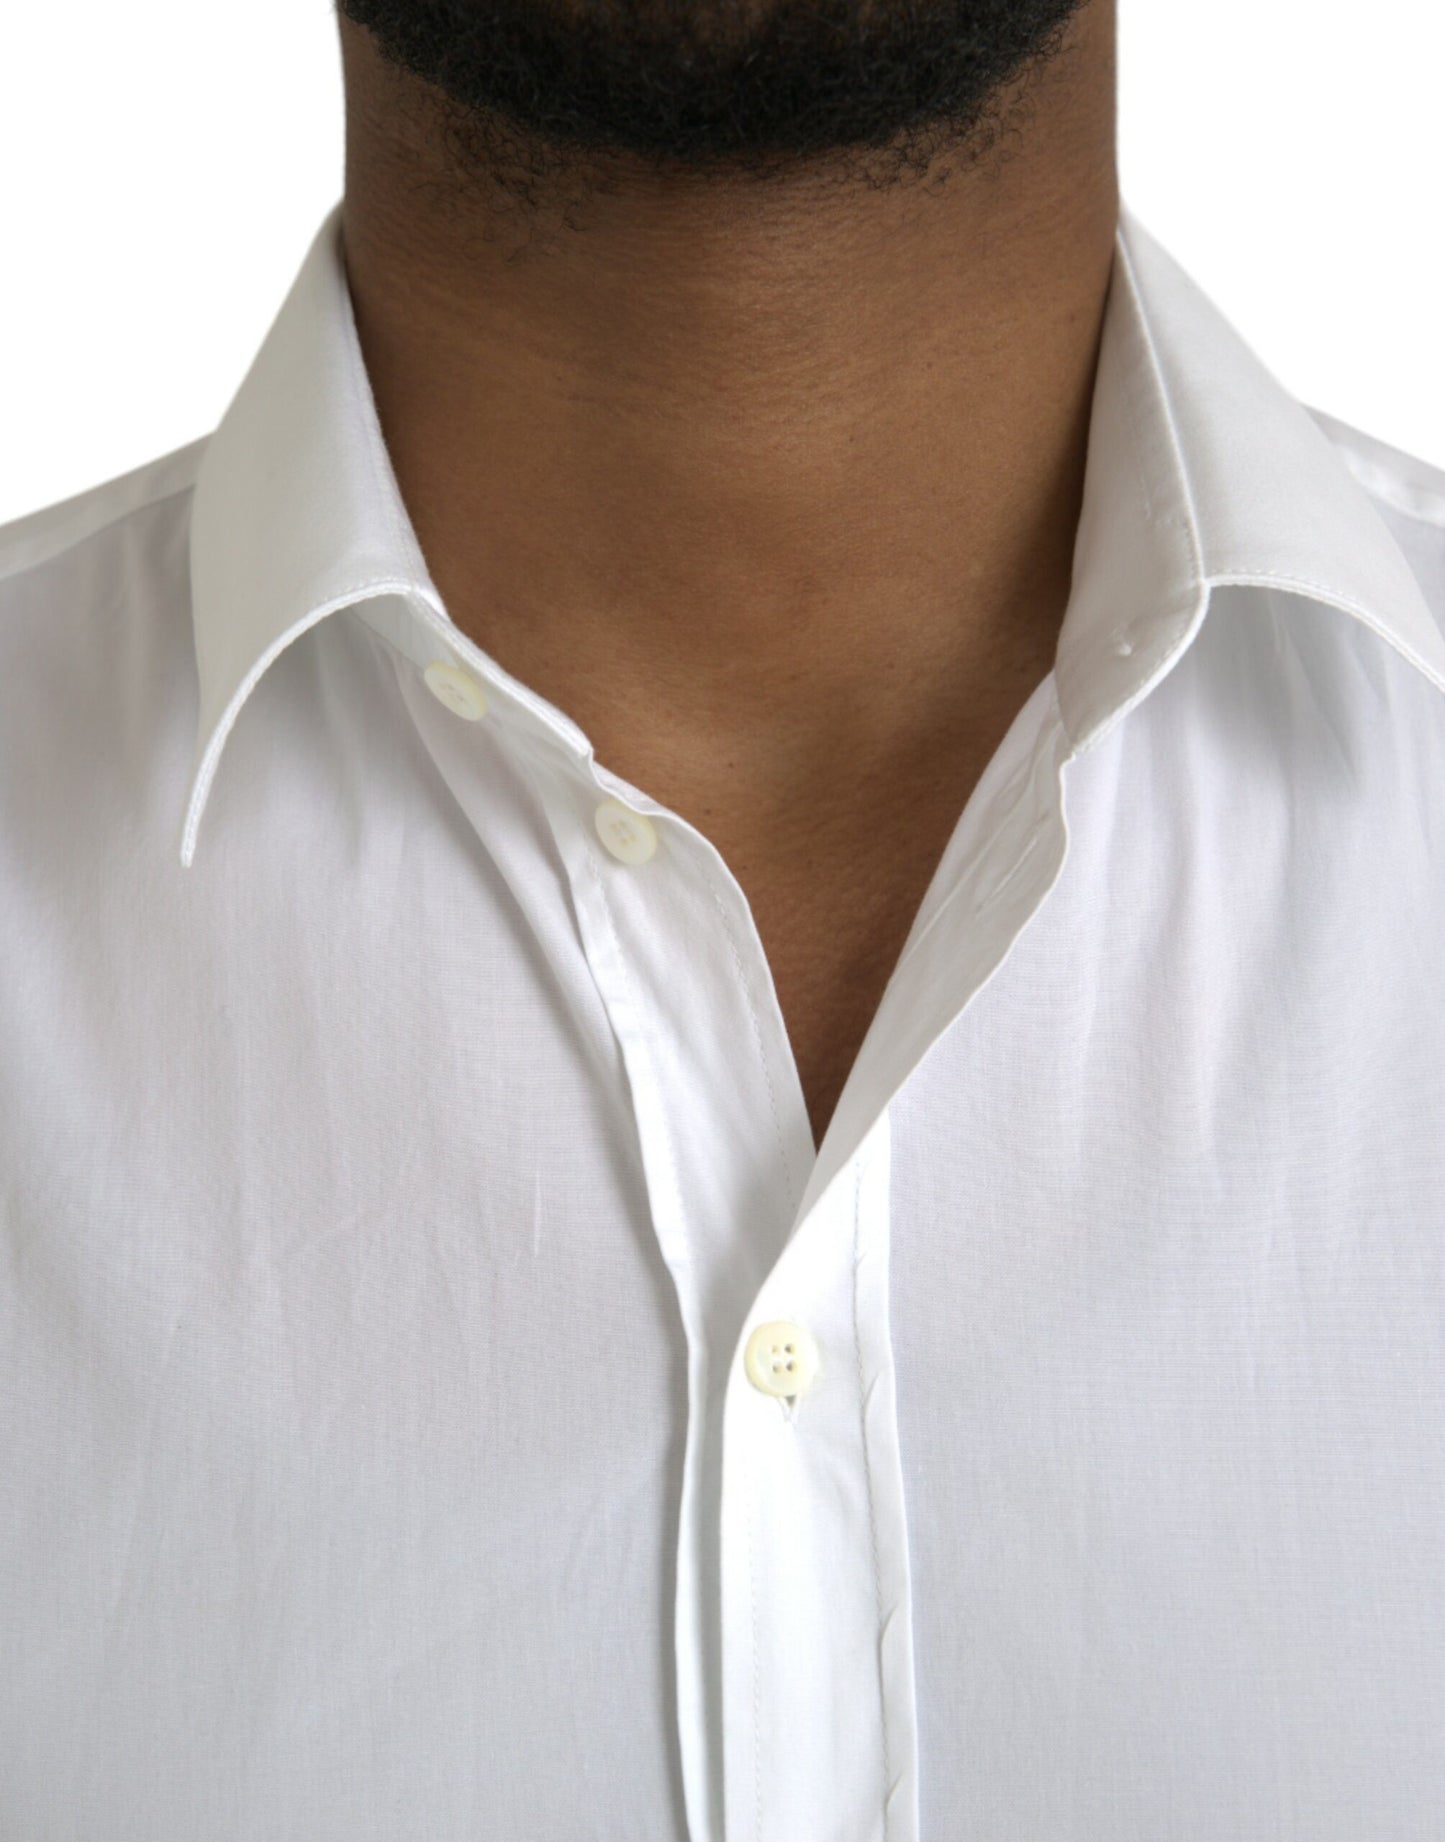 White Cotton Stretch Formal SICILIA Shirt